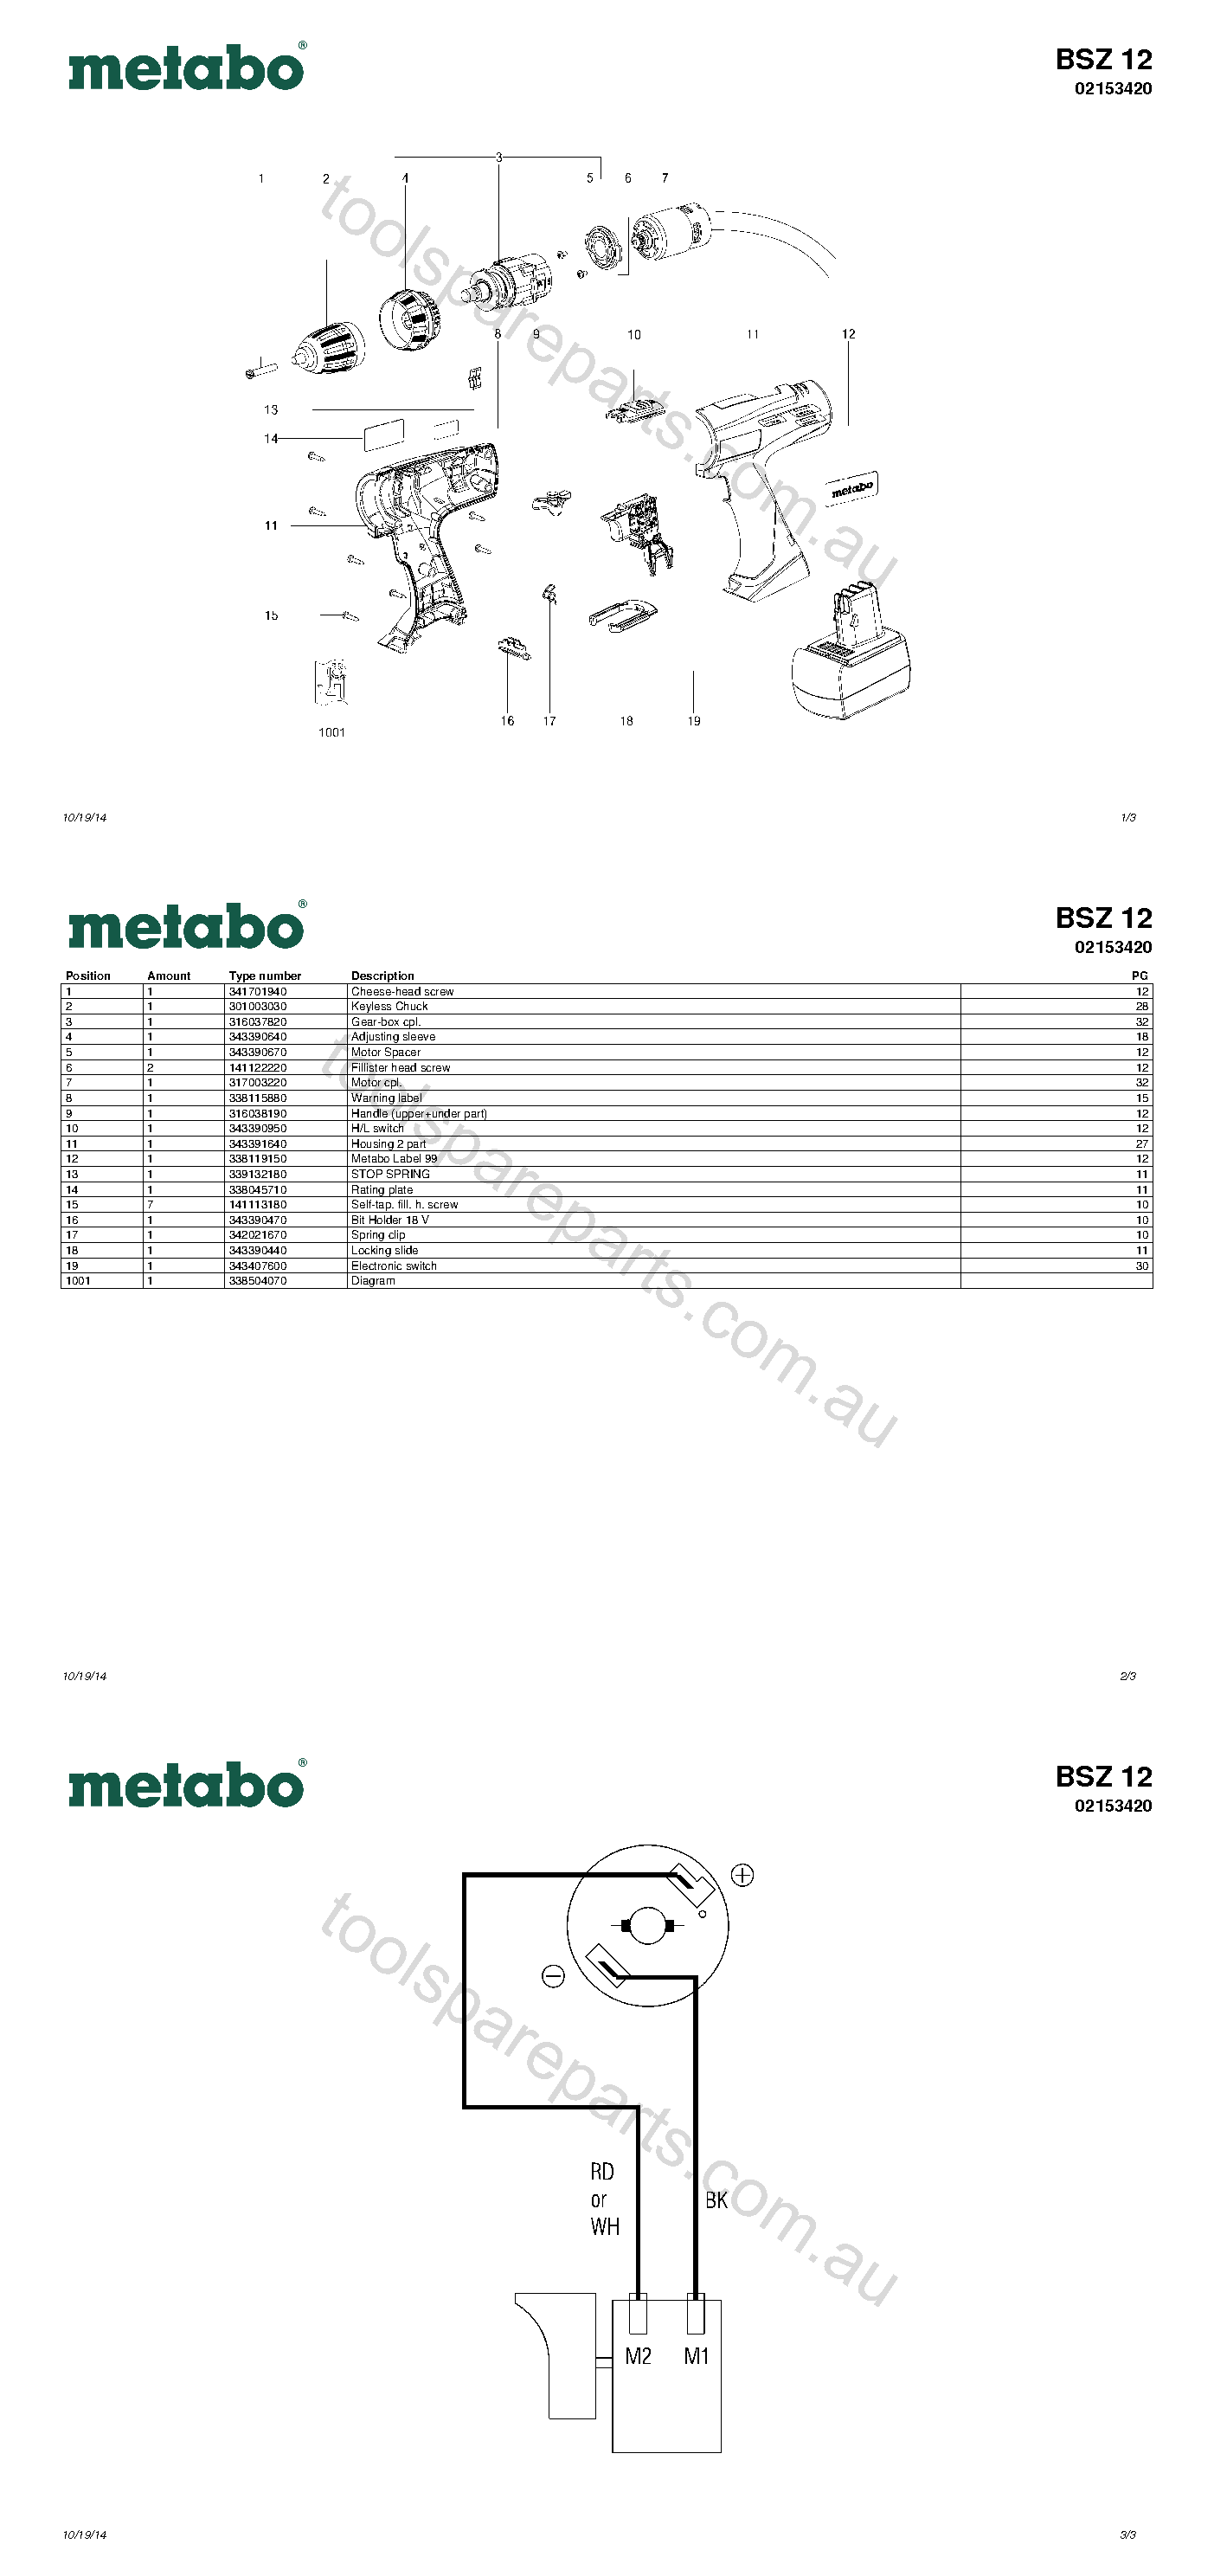 Metabo BSZ 12 02153420  Diagram 1